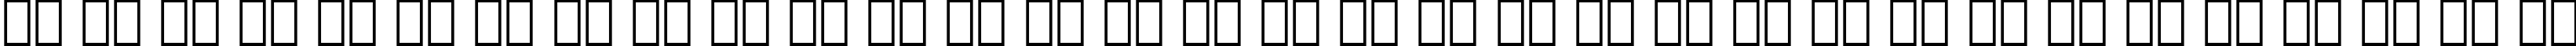 Пример написания русского алфавита шрифтом Franklin Gothic ITC Demi Italic BT